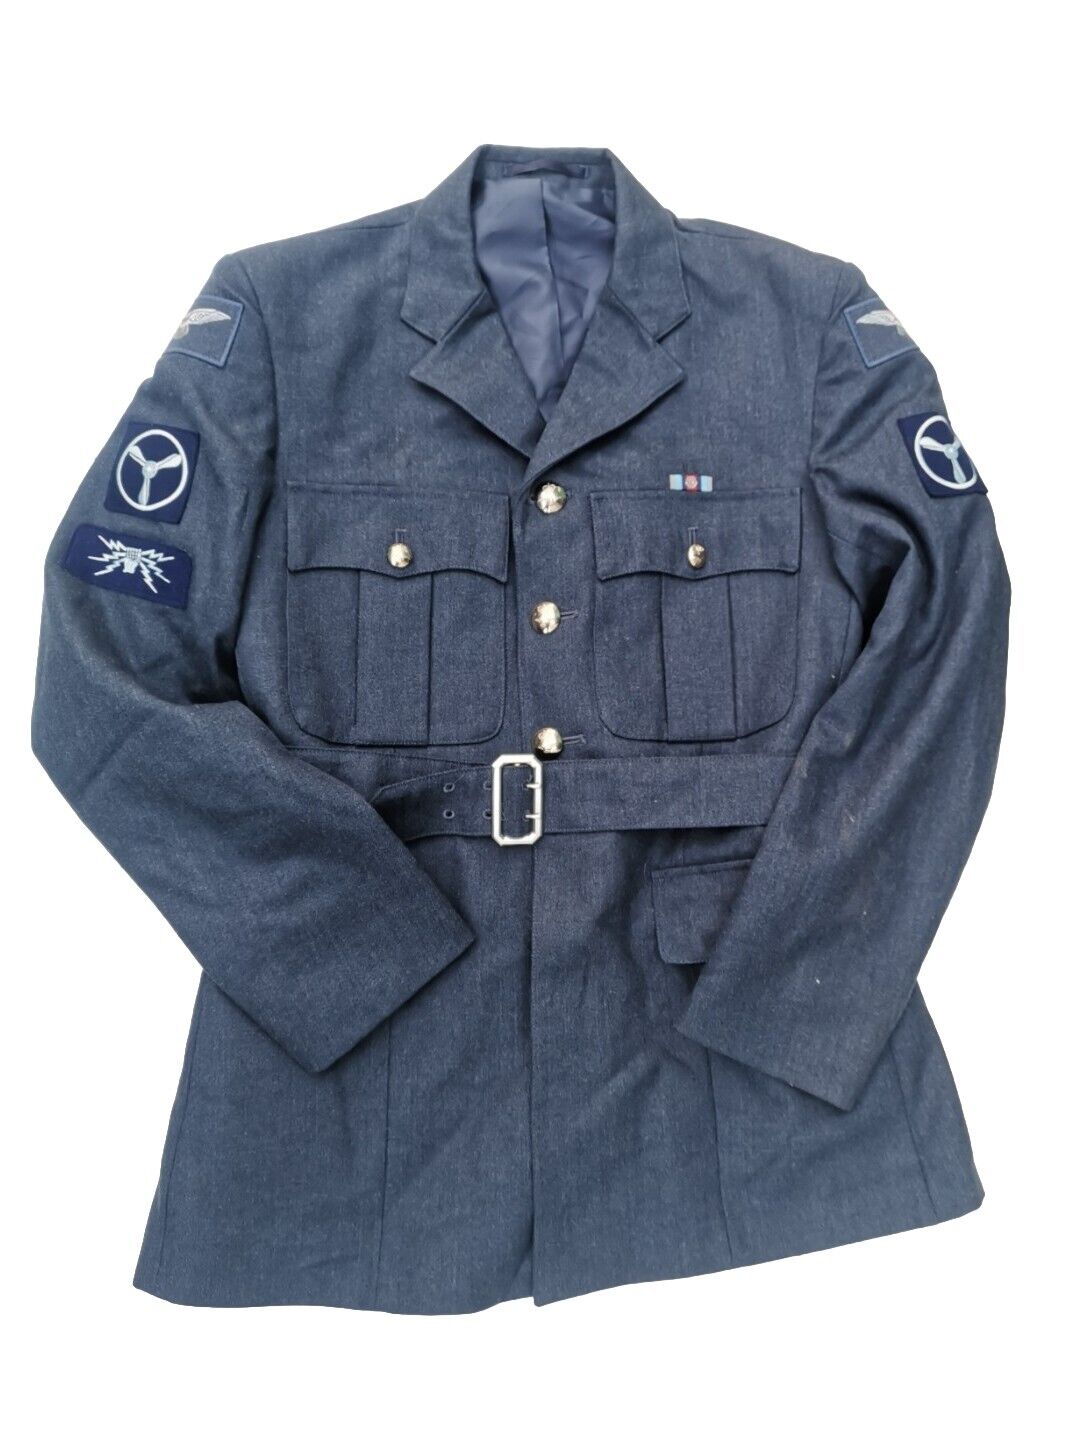 Genuine British RAF No1 Royal Air Force Dress Uniform Jacket Tunic 1940s Weekend